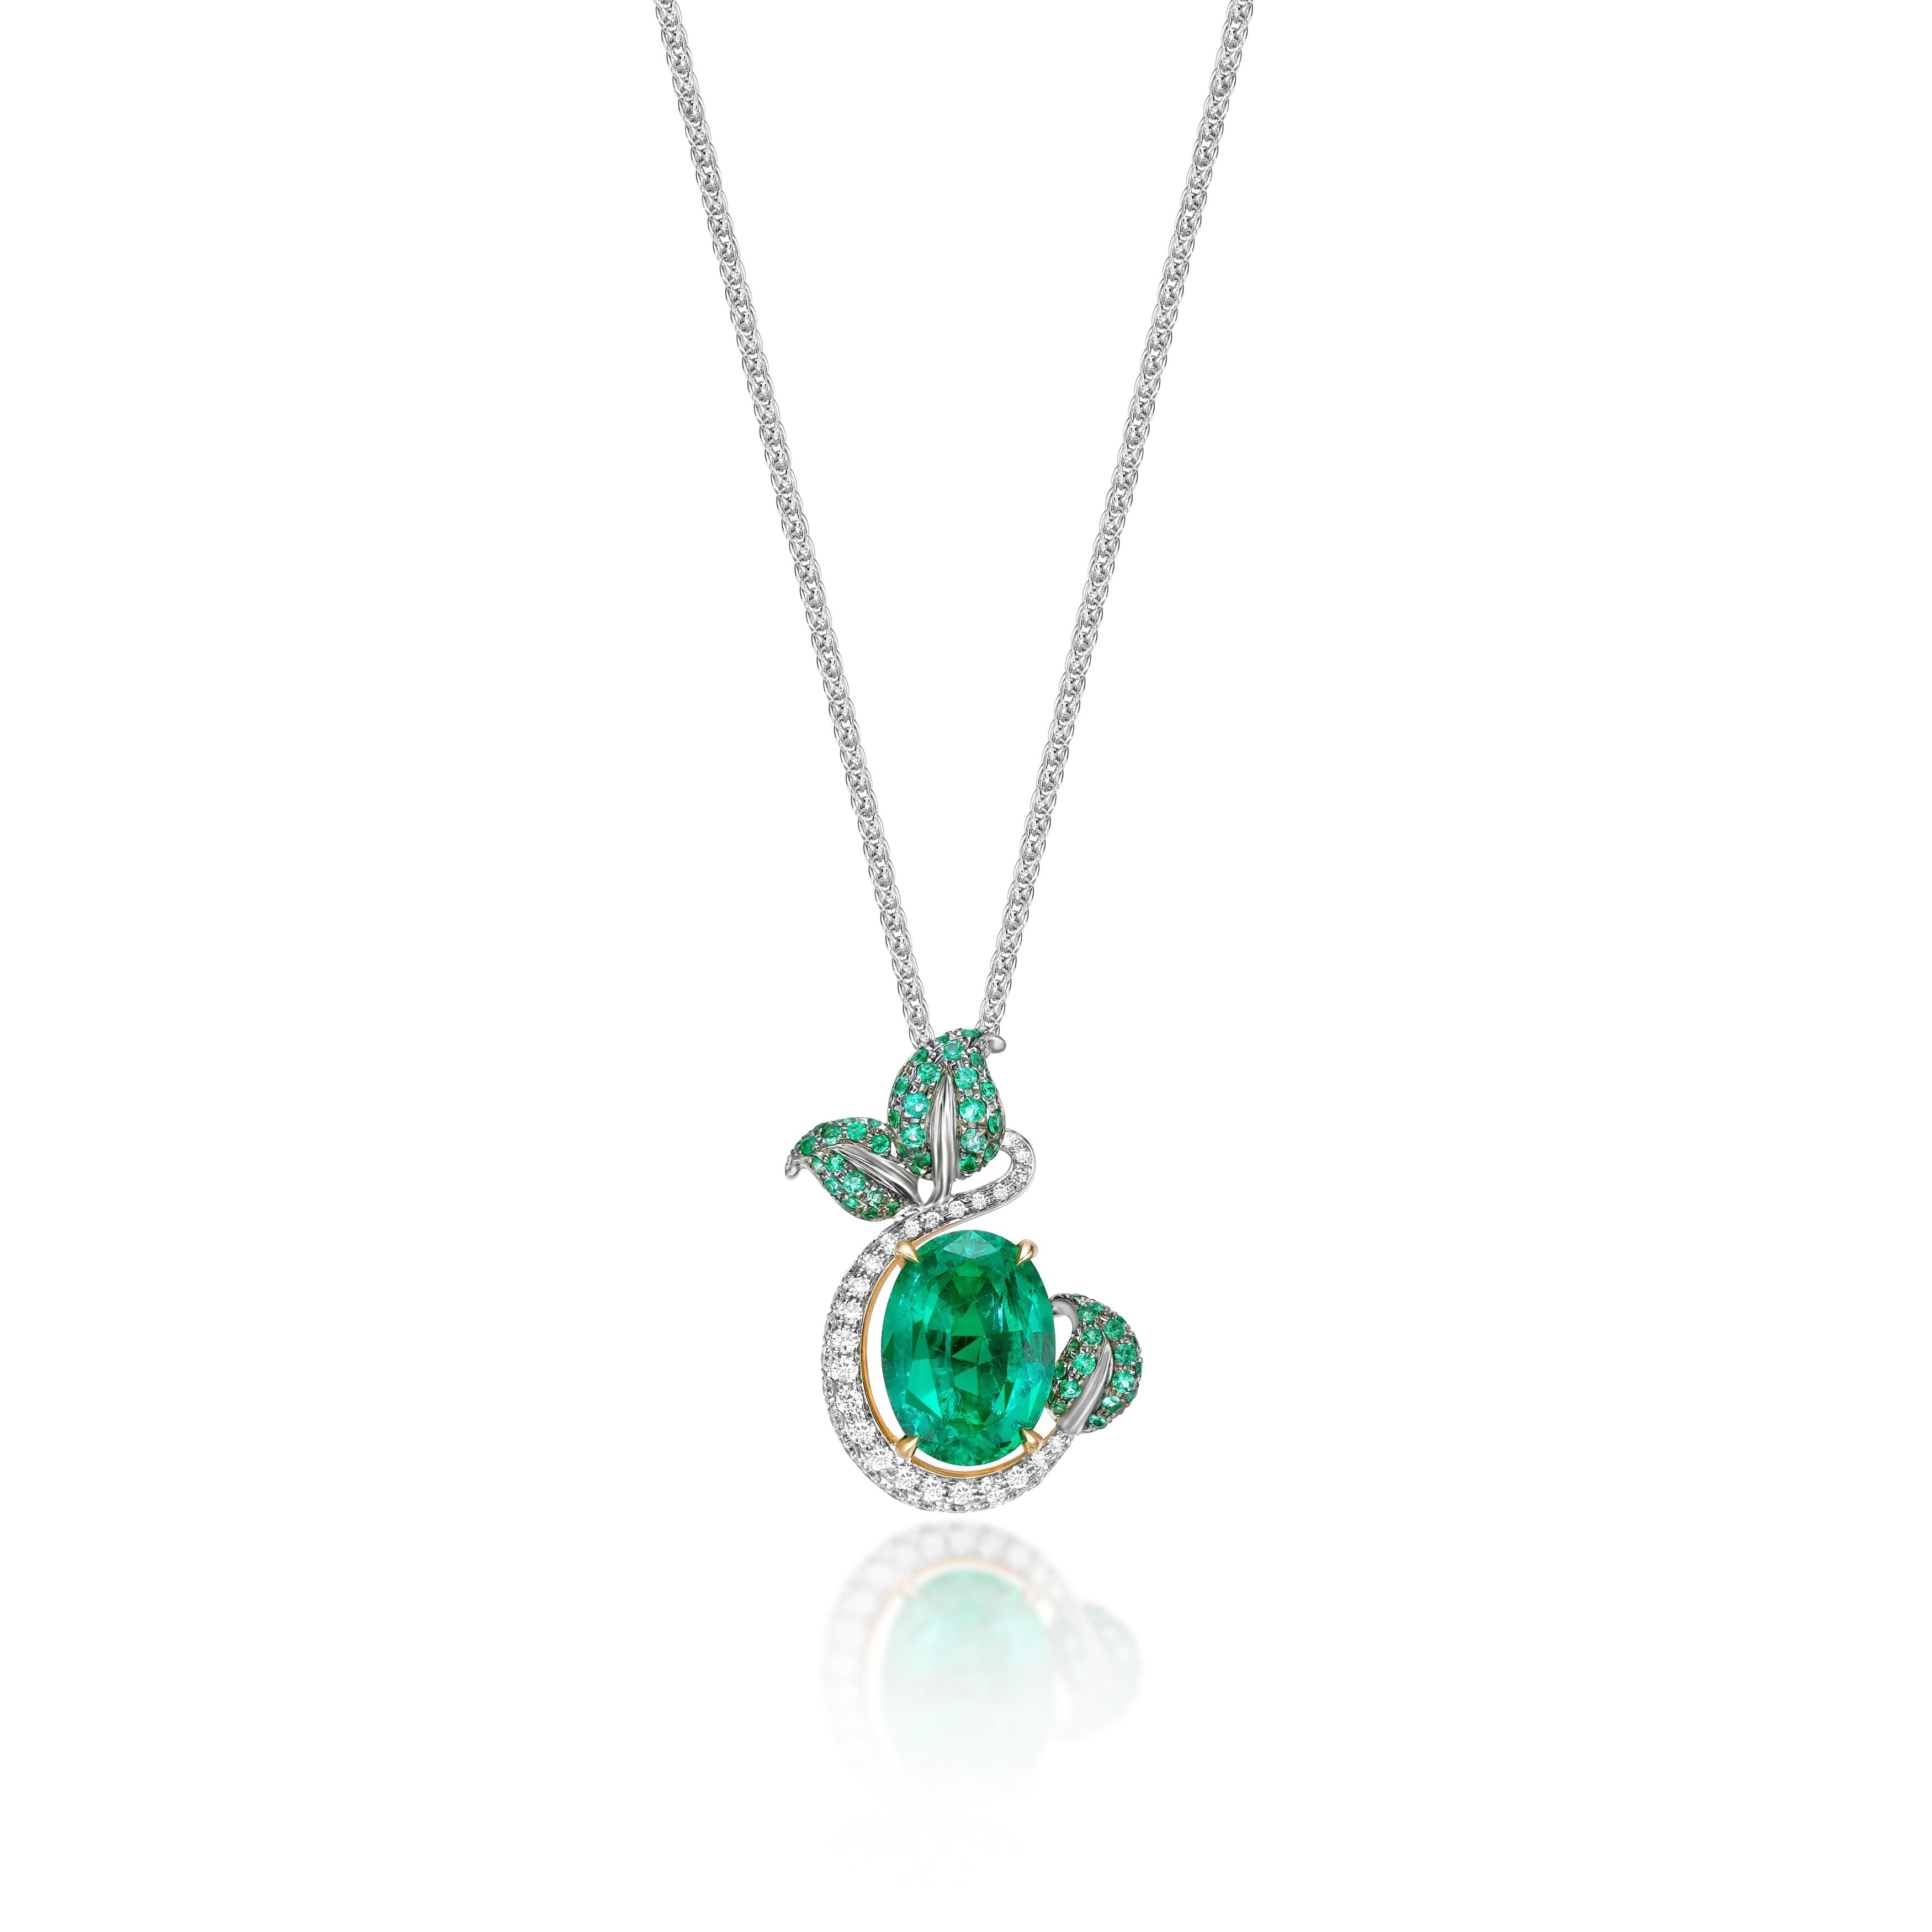 Oval Shape Emerald Pendant with Diamonds-3.79ct TW